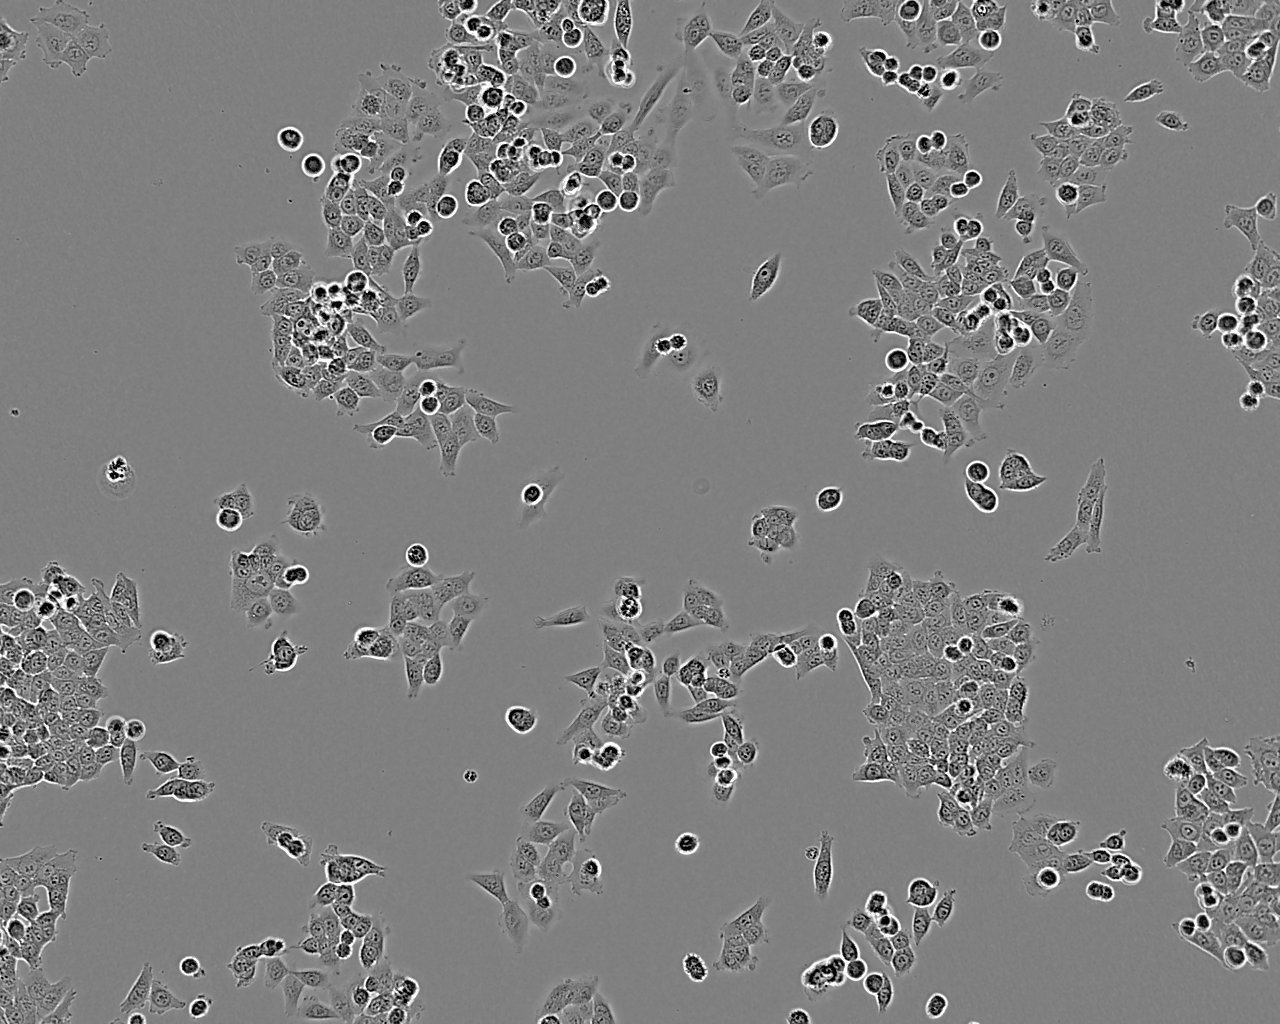 Melan-a epithelioid cells小鼠黑色素细胞系,Melan-a epithelioid cells